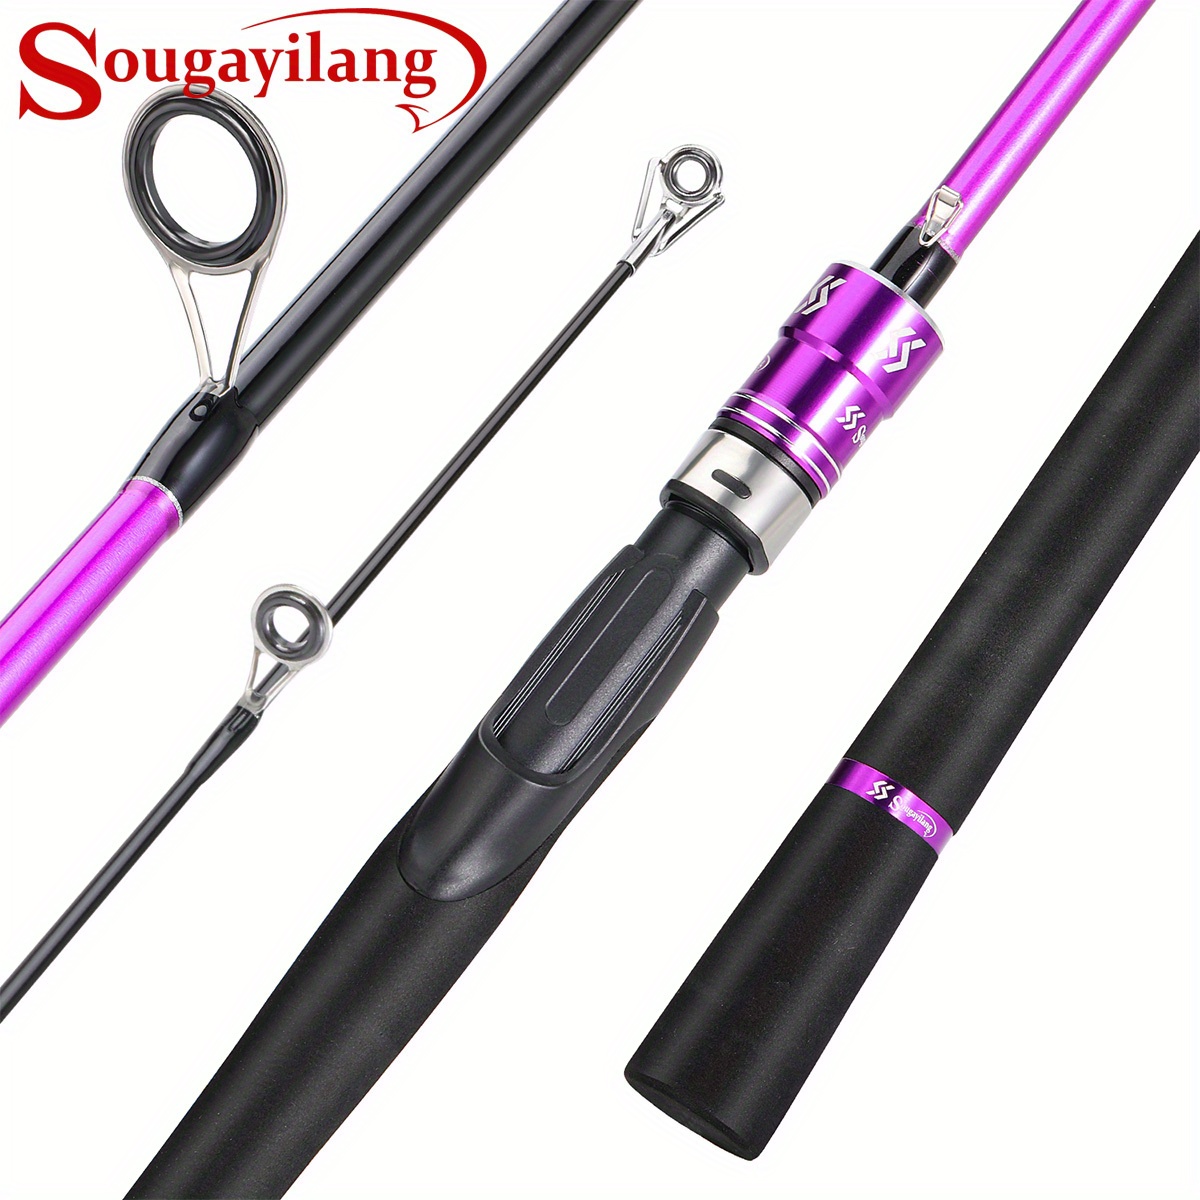 Sougyilang 2-piece 180cm/6ft Fishing Rod, Solid Carbon Fiber